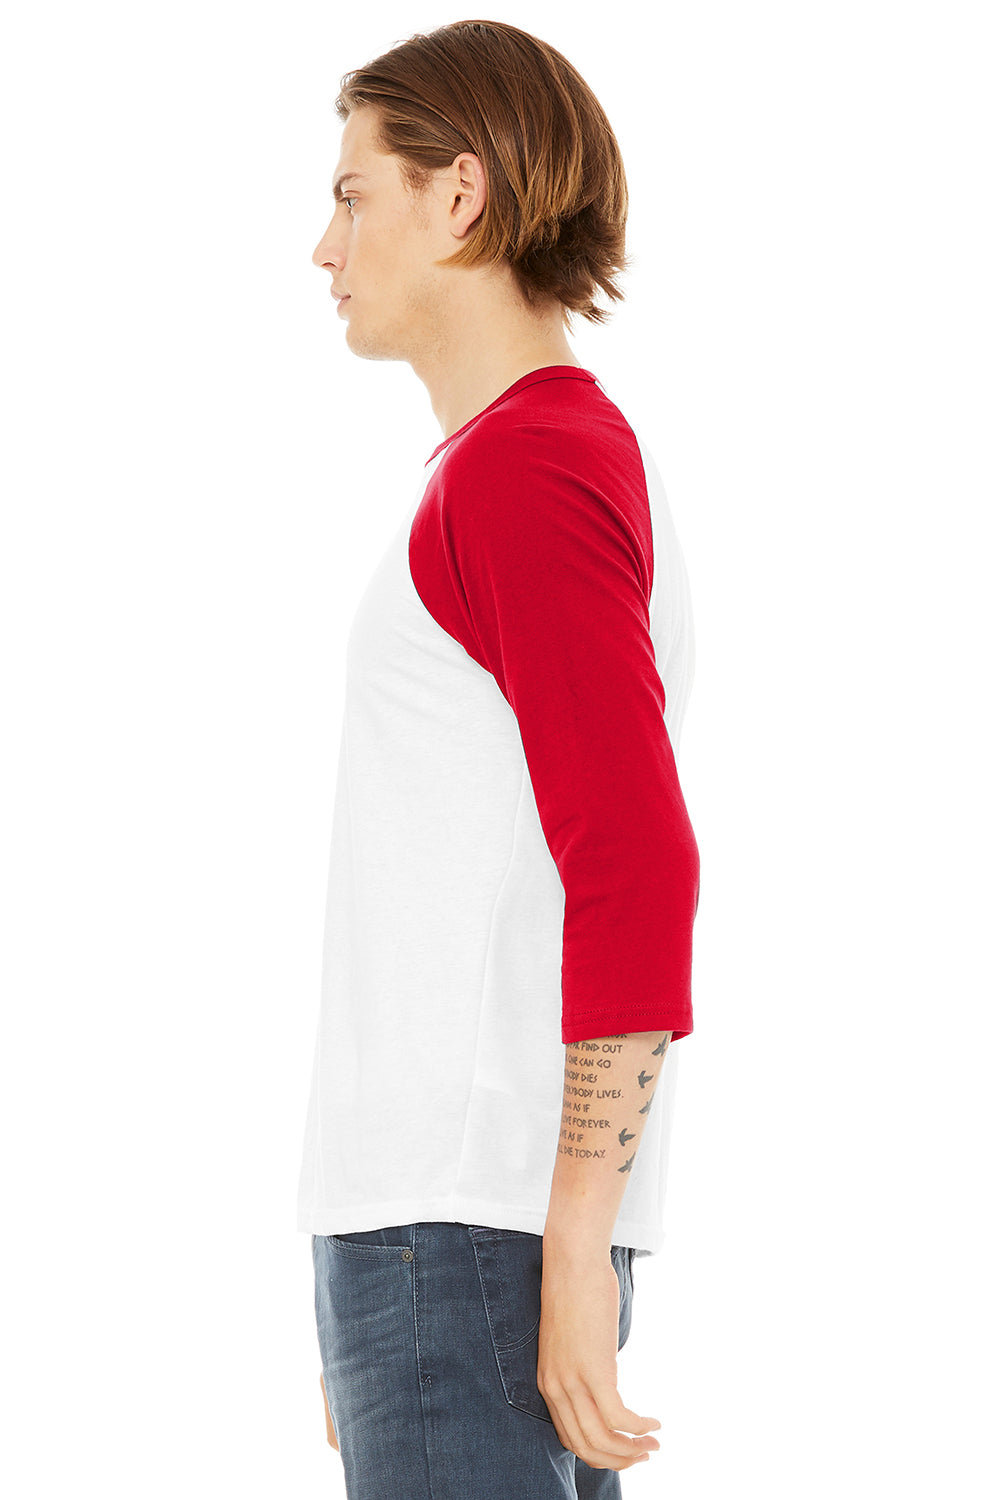 Bella + Canvas BC3200/3200 Mens 3/4 Sleeve Crewneck T-Shirt White/Red Model Side